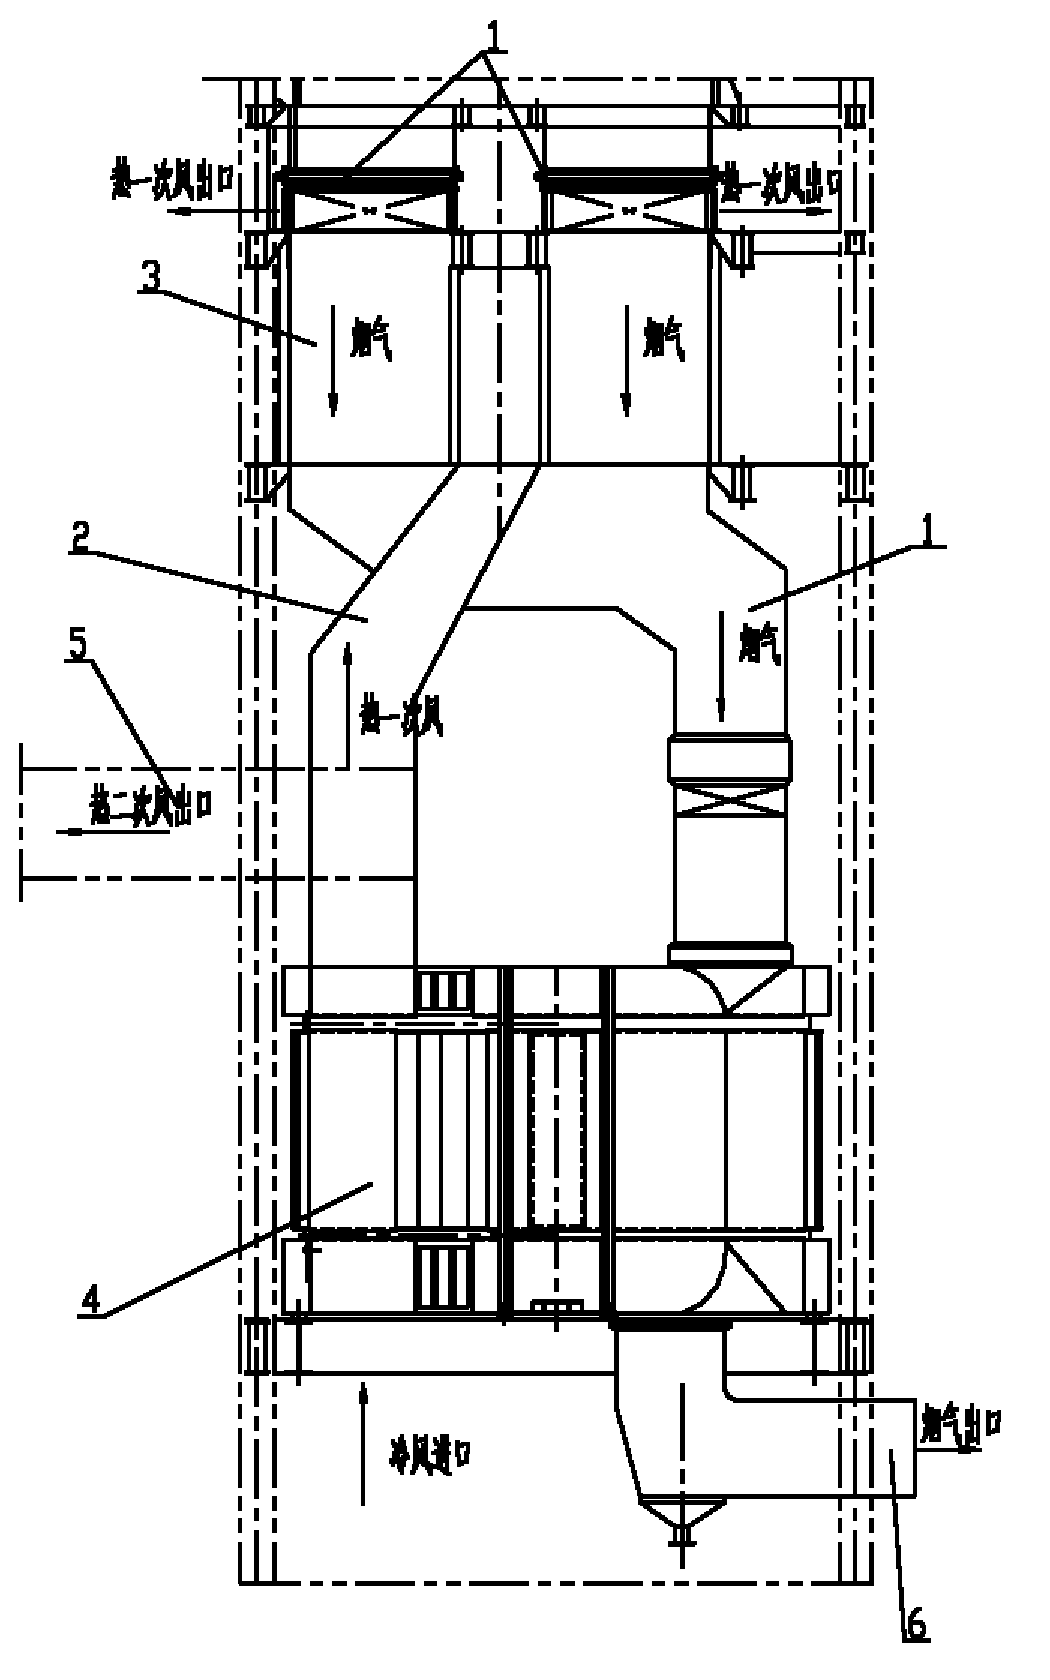 Air preheater arrangement structure of boiler